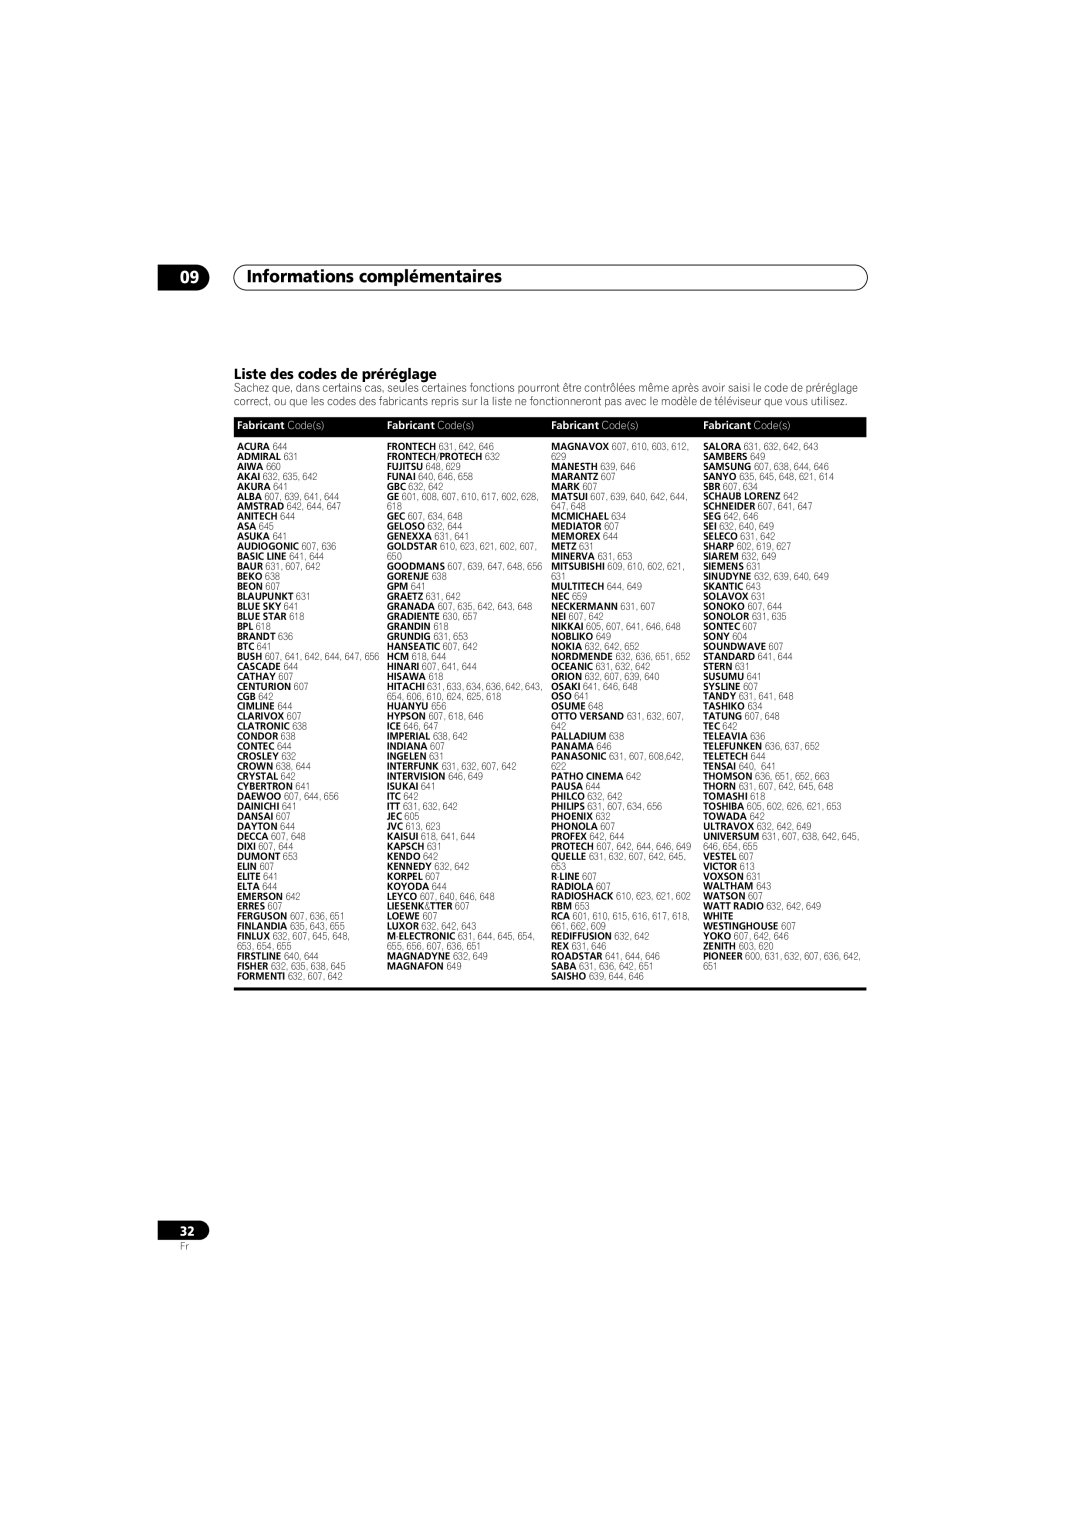 Pioneer HTS-260 09Informations complémentaires, Liste des codes de préréglage, Fabricant Codes, Acura, Admiral, Sambers 